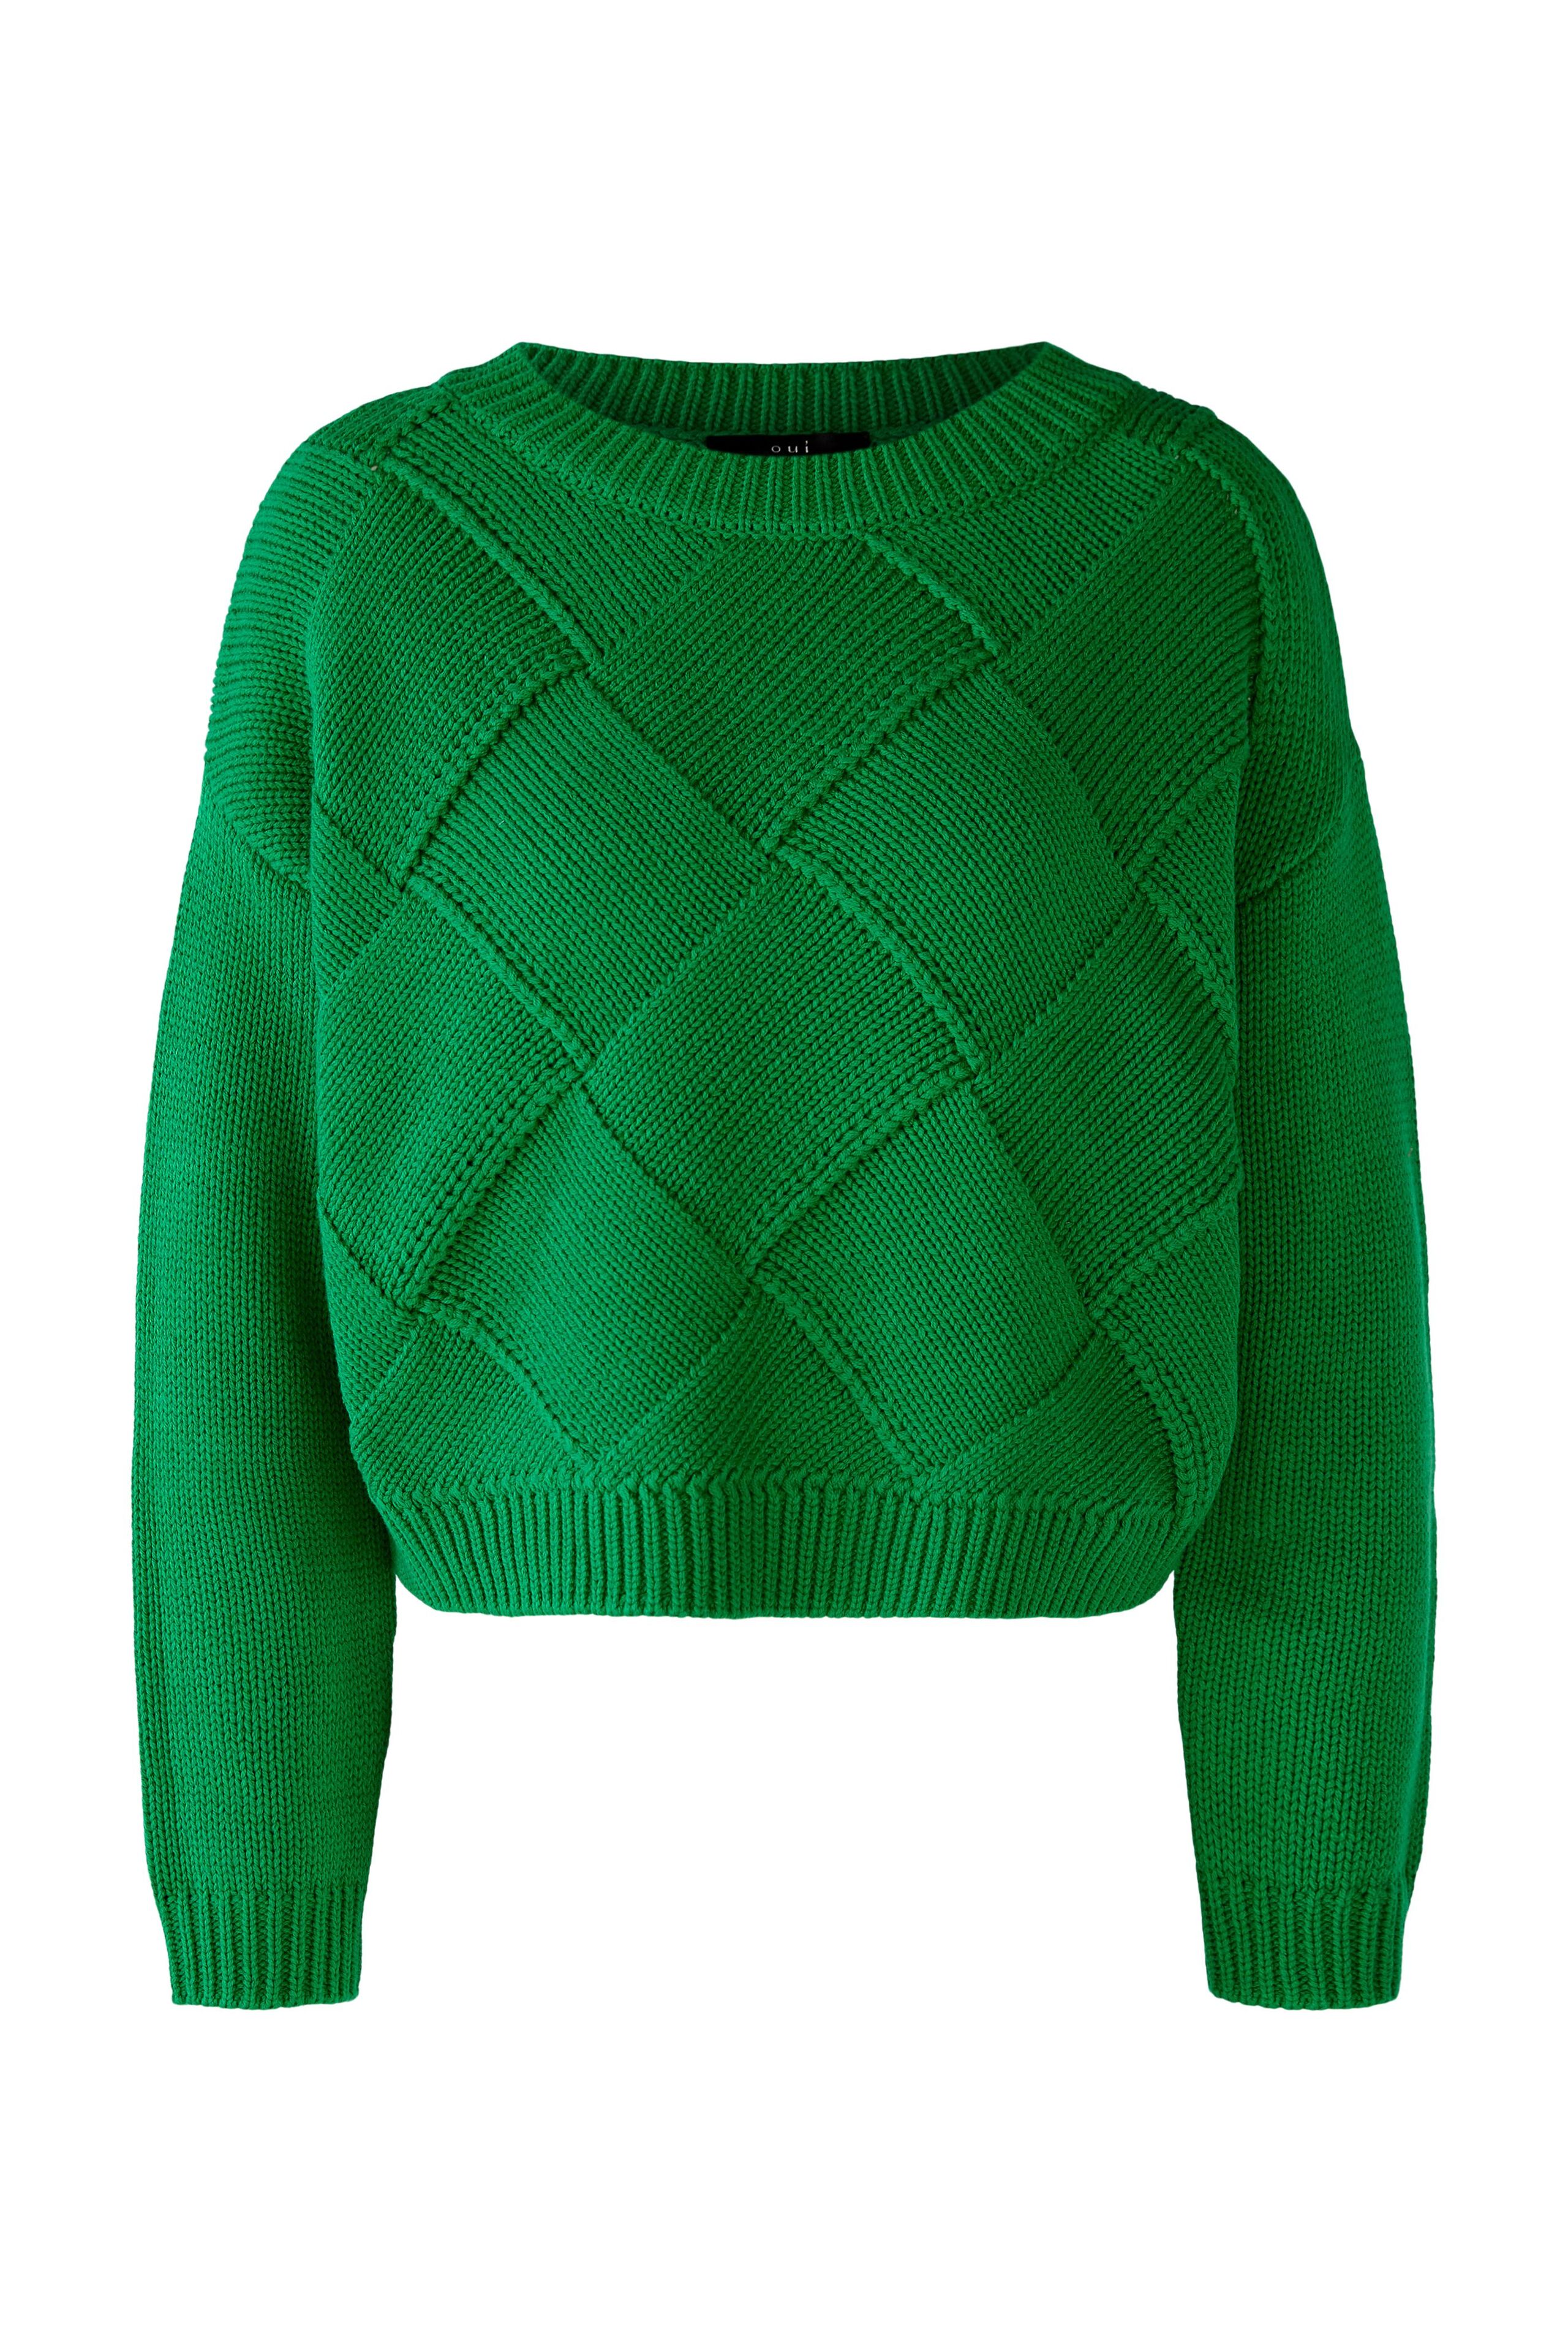 Oui Damen Boxy Pullover - grün 36